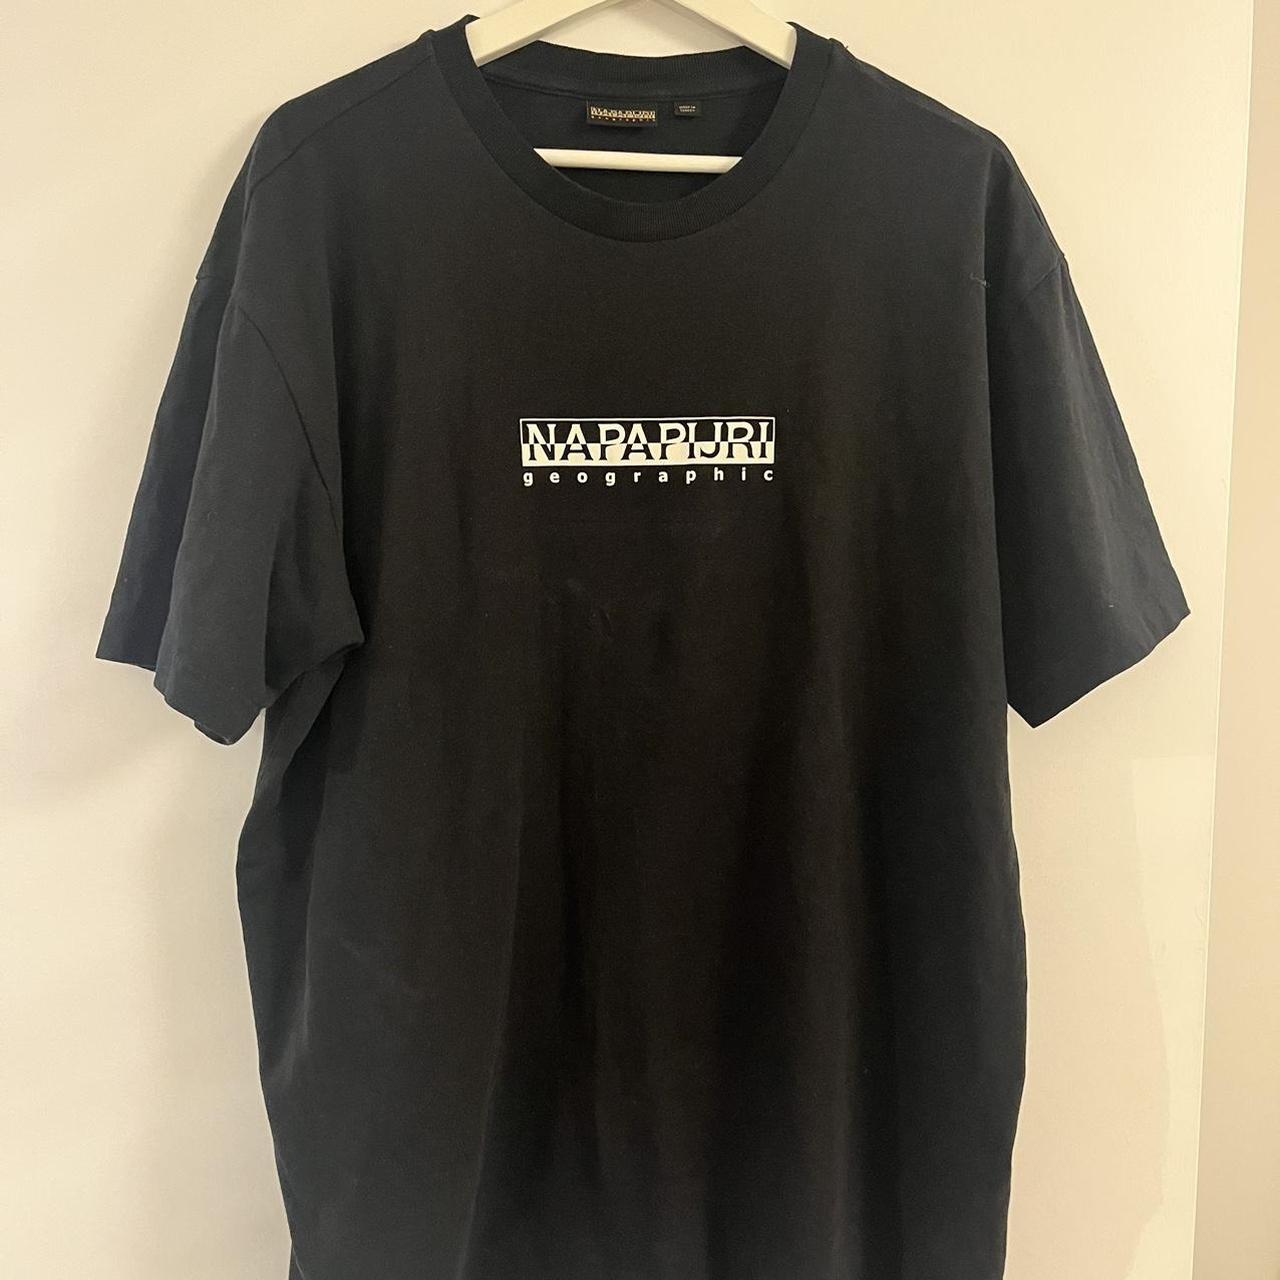 Napapijri T-shirt - men’s large - Depop